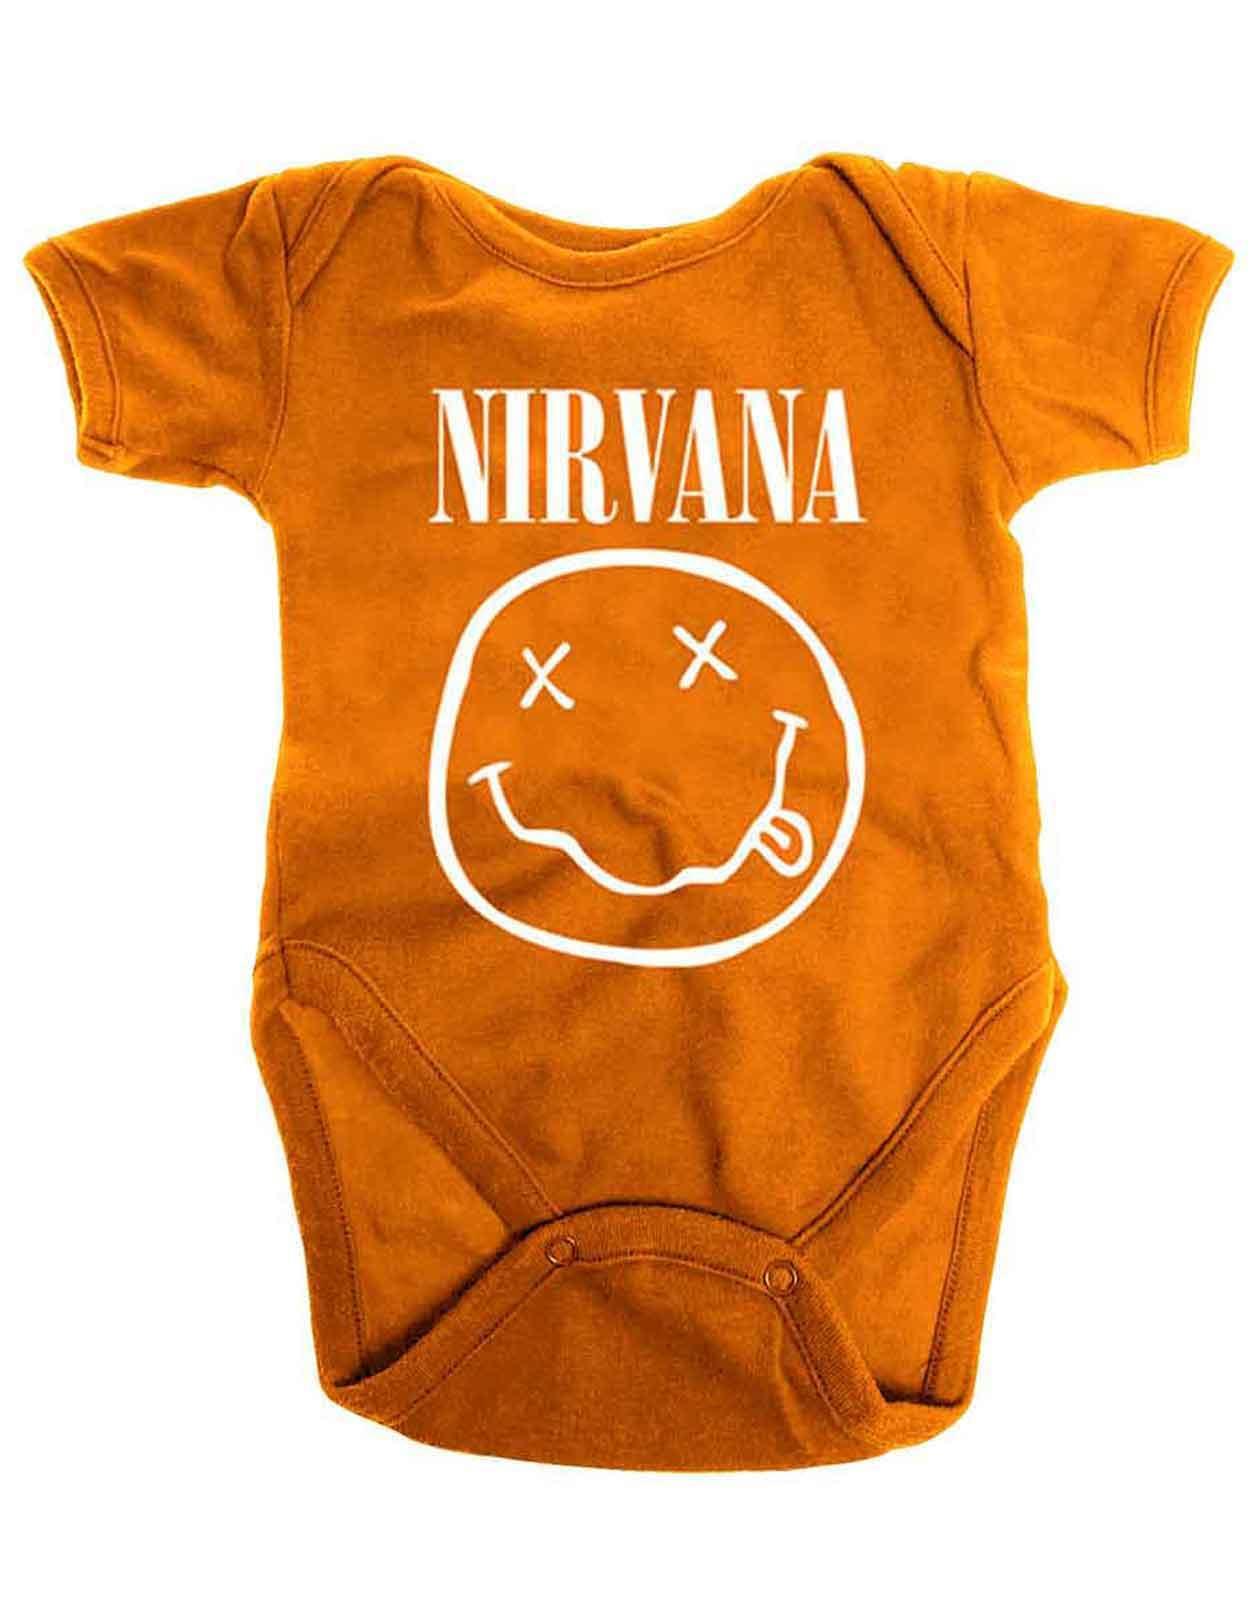 Nirvana Baby Grow White Smile Band Logo new Official Orange 0 to 24 Months